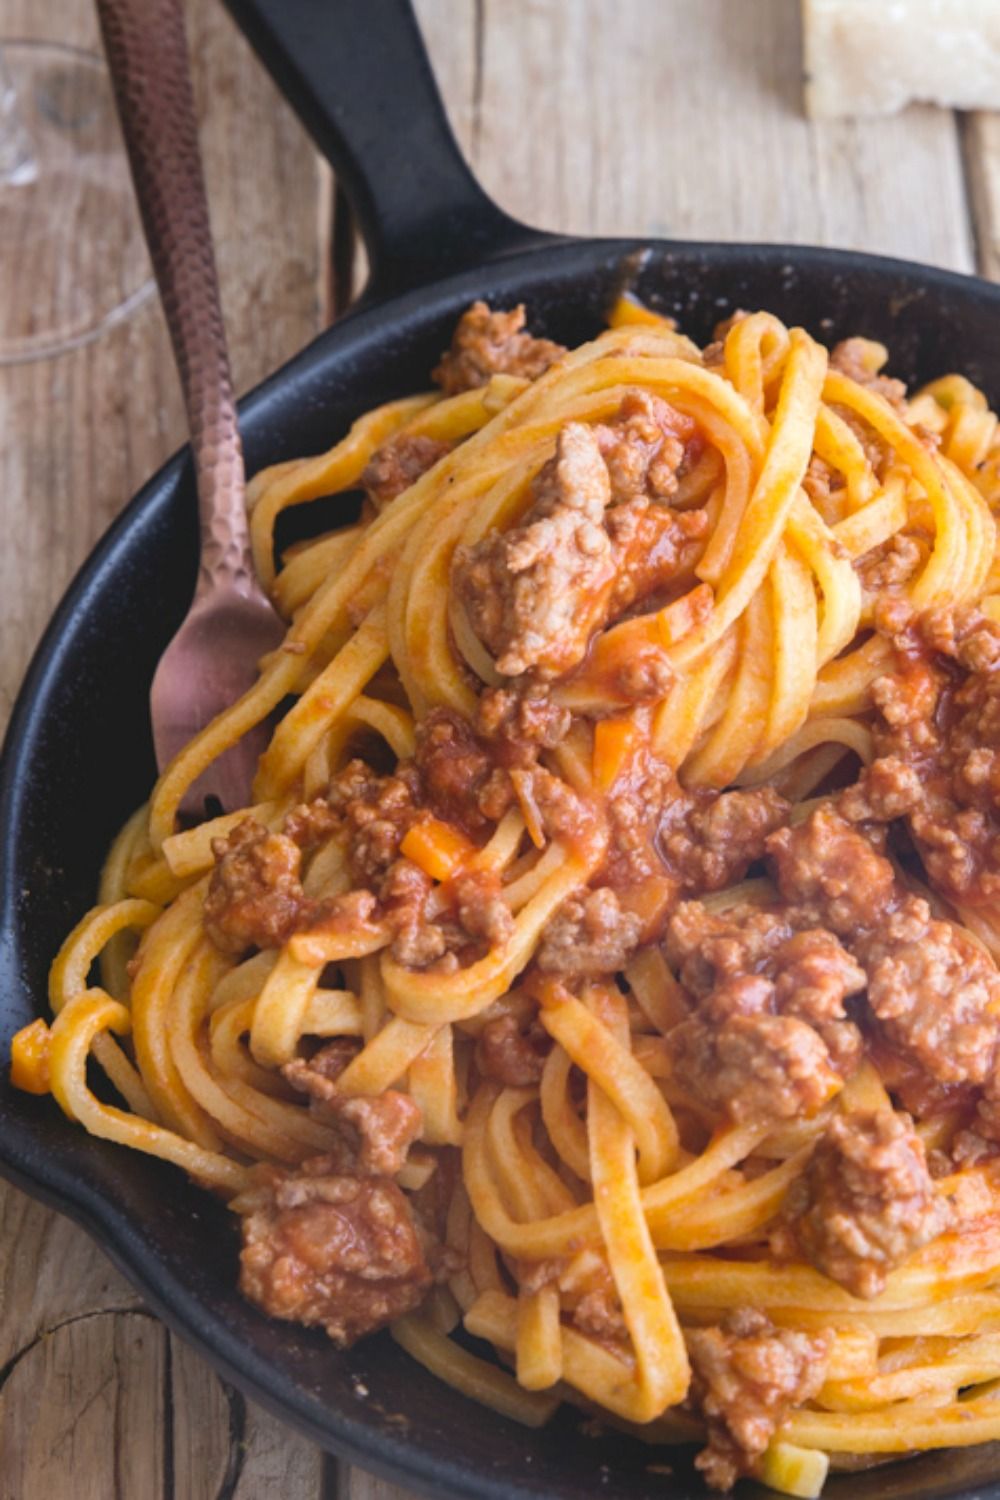 Viola Family: How To Make Spaghetti Meat Sauce With Ragu